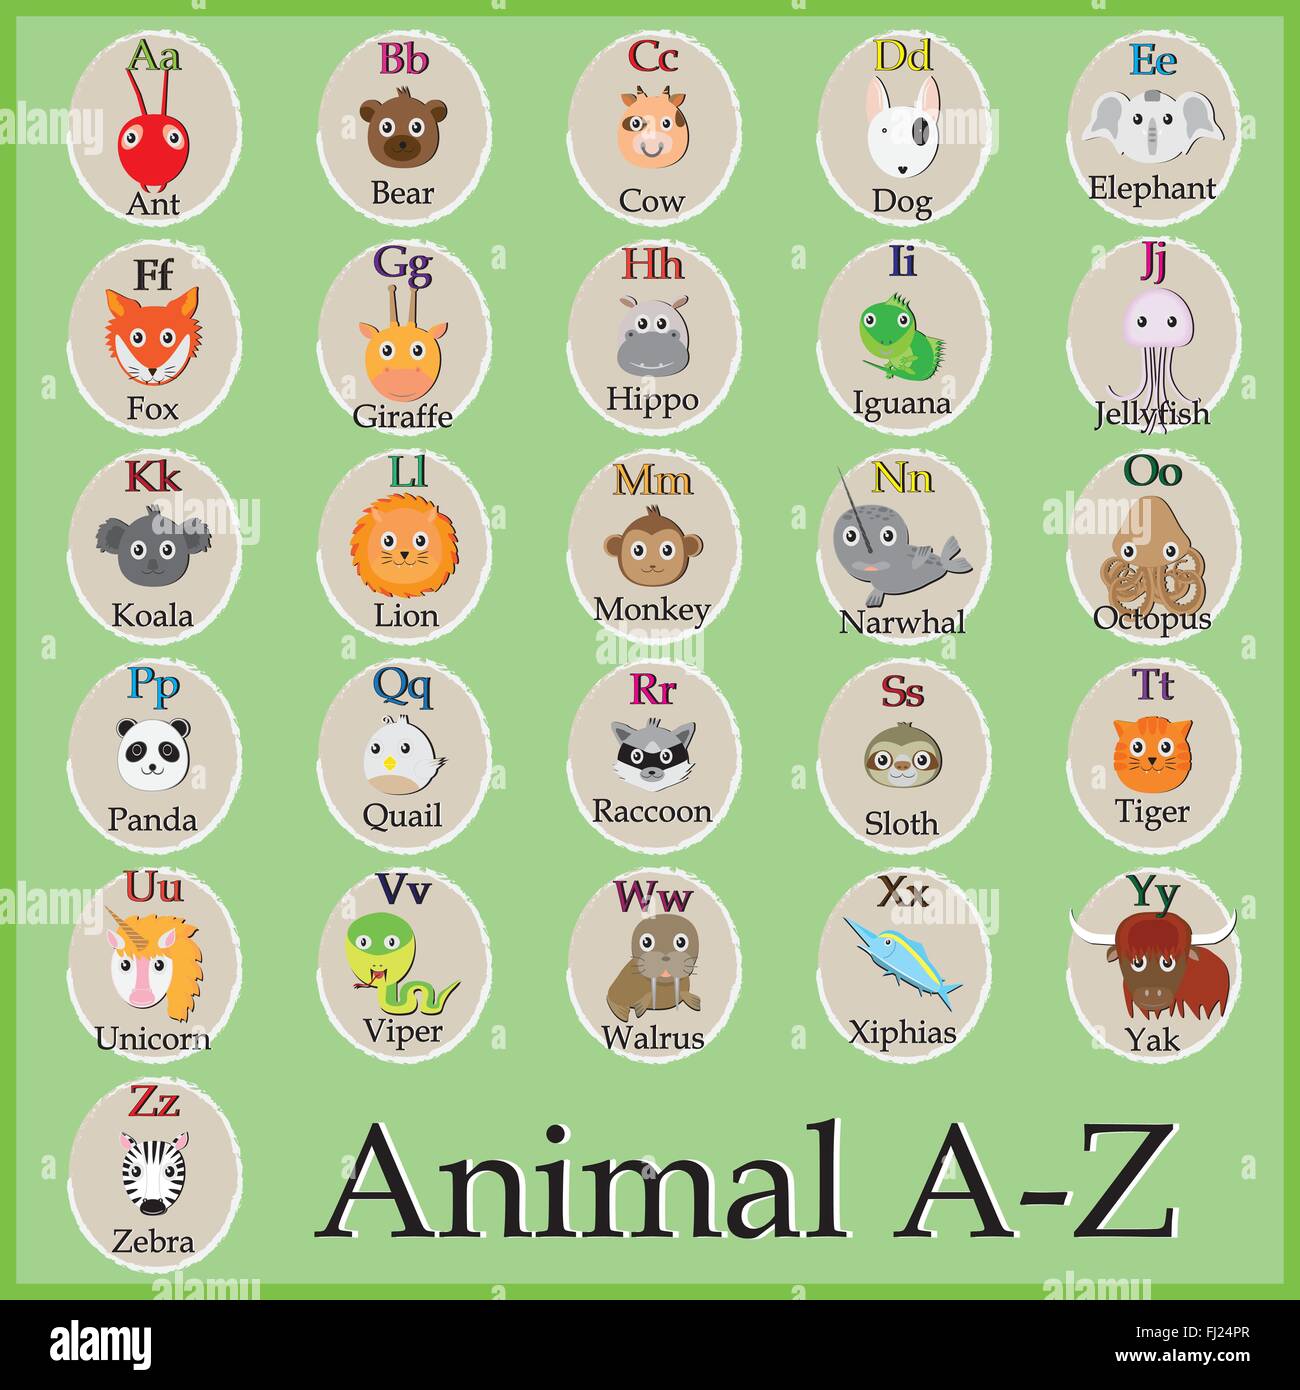 Cute animal alphabet. Funny cartoon character. A, B, C, D, E, F, G, H, I, J, K, L, M, N, O, P, Q, R, S, T, U, V, W, X, Y, Z Stock Vector